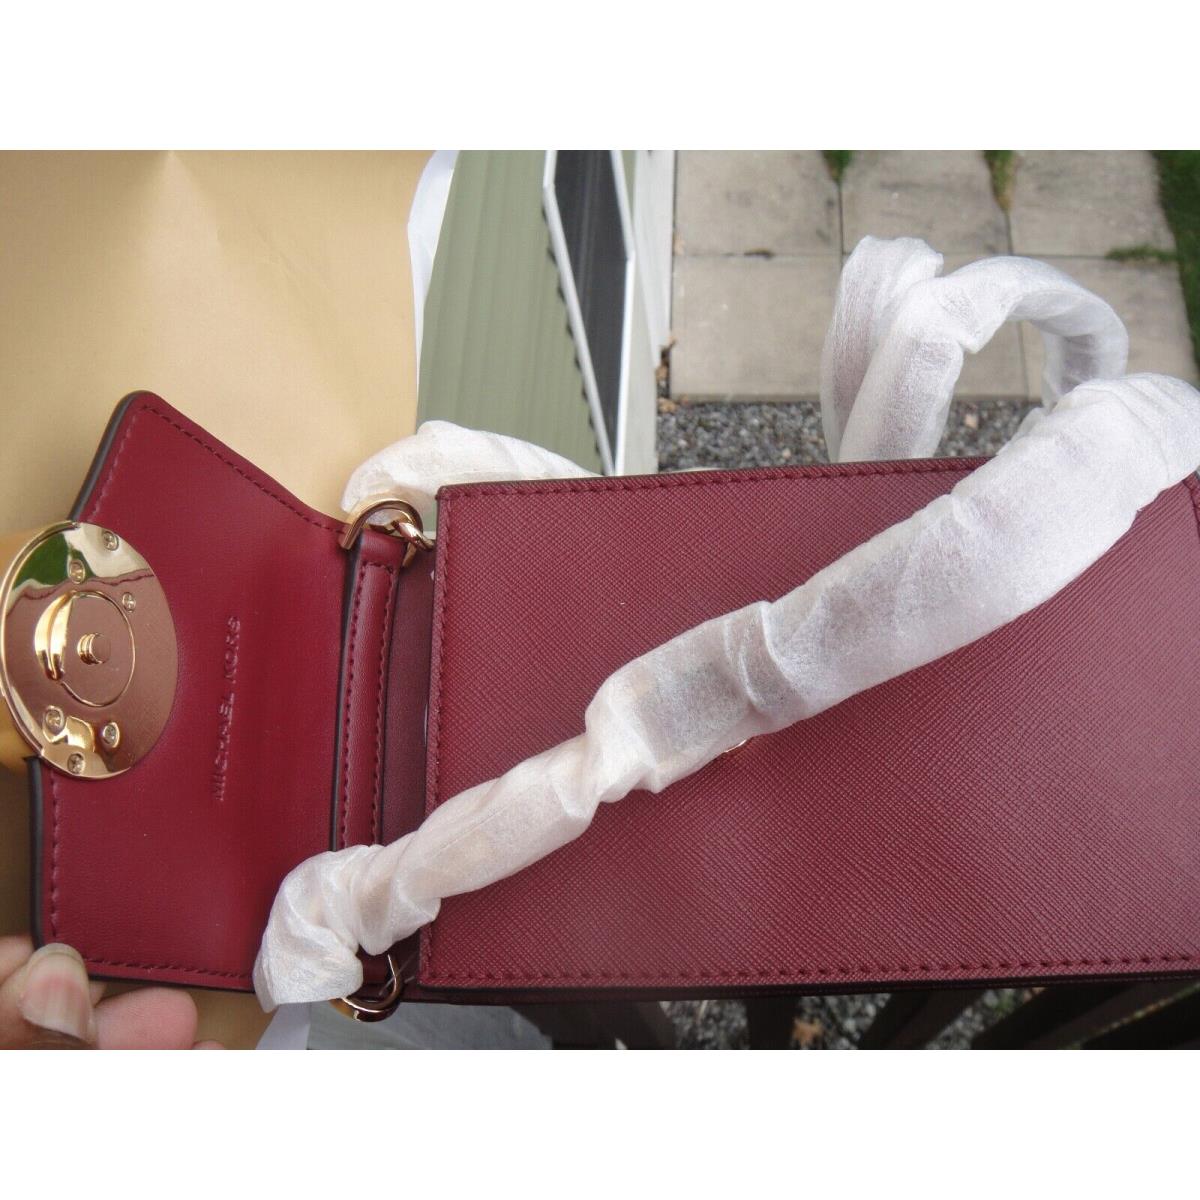 Michael Kors Carmen Mulberry NS Phone Crossbody Bag.$398.00.100